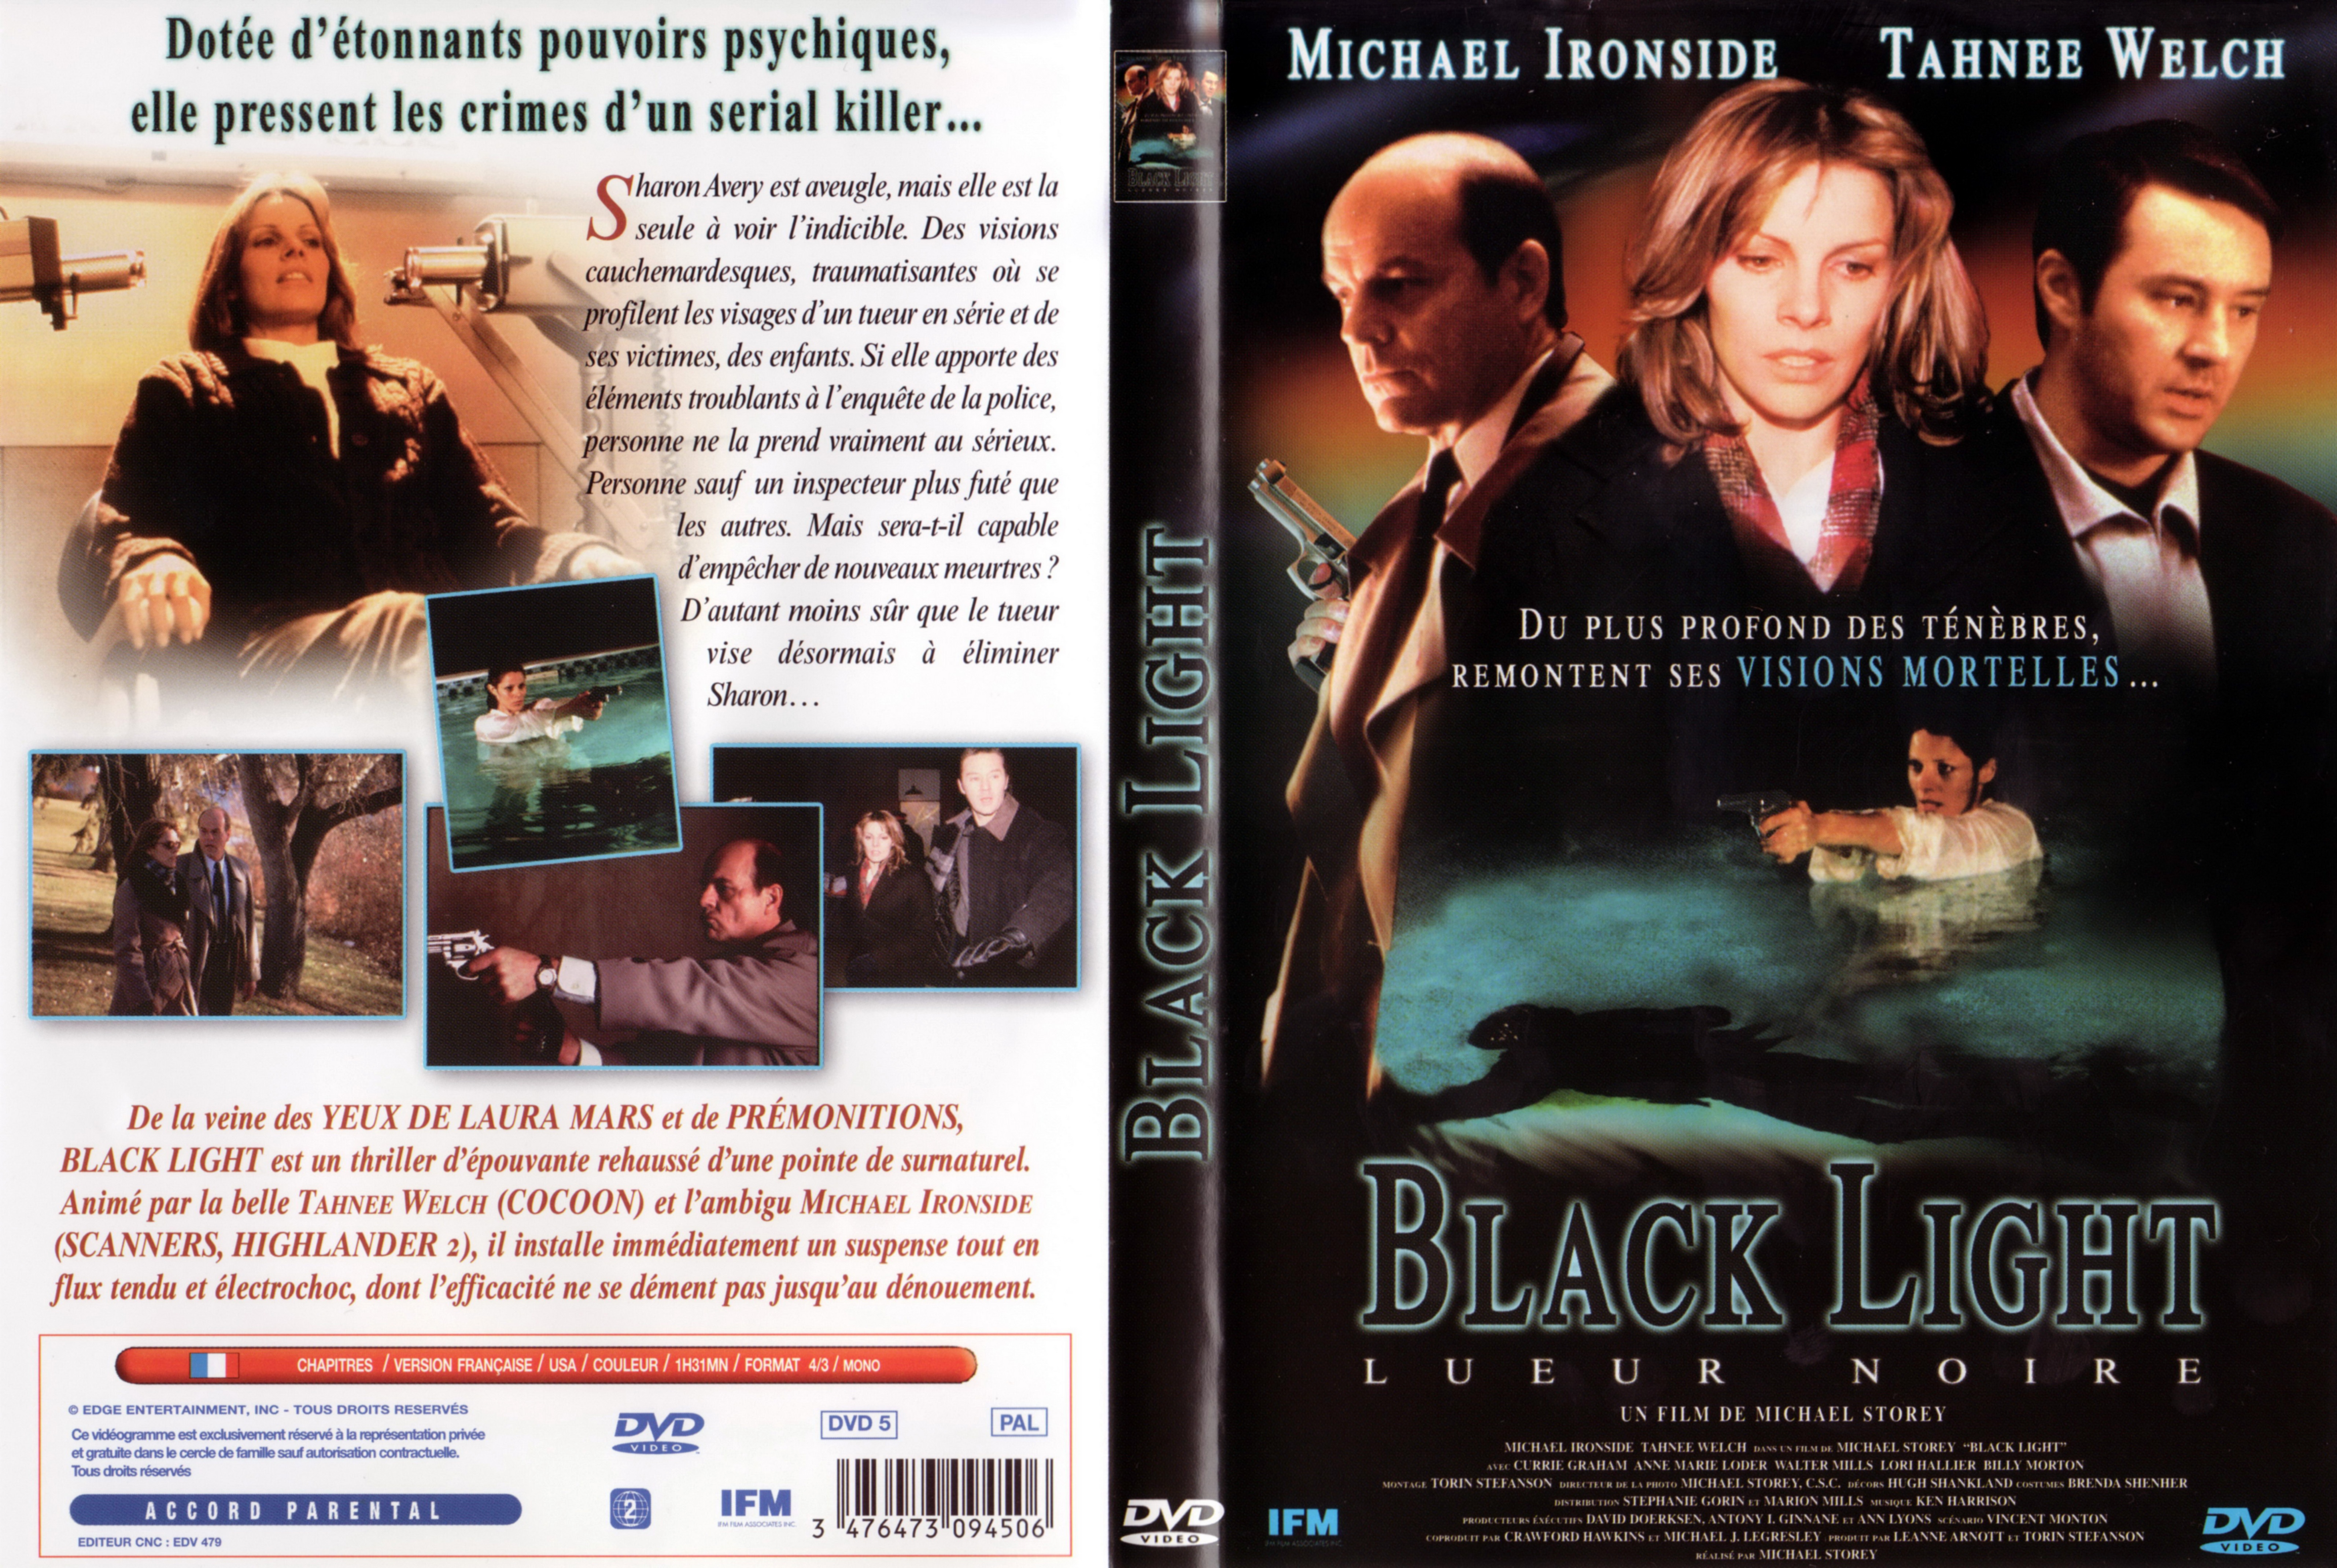 Jaquette DVD Black light